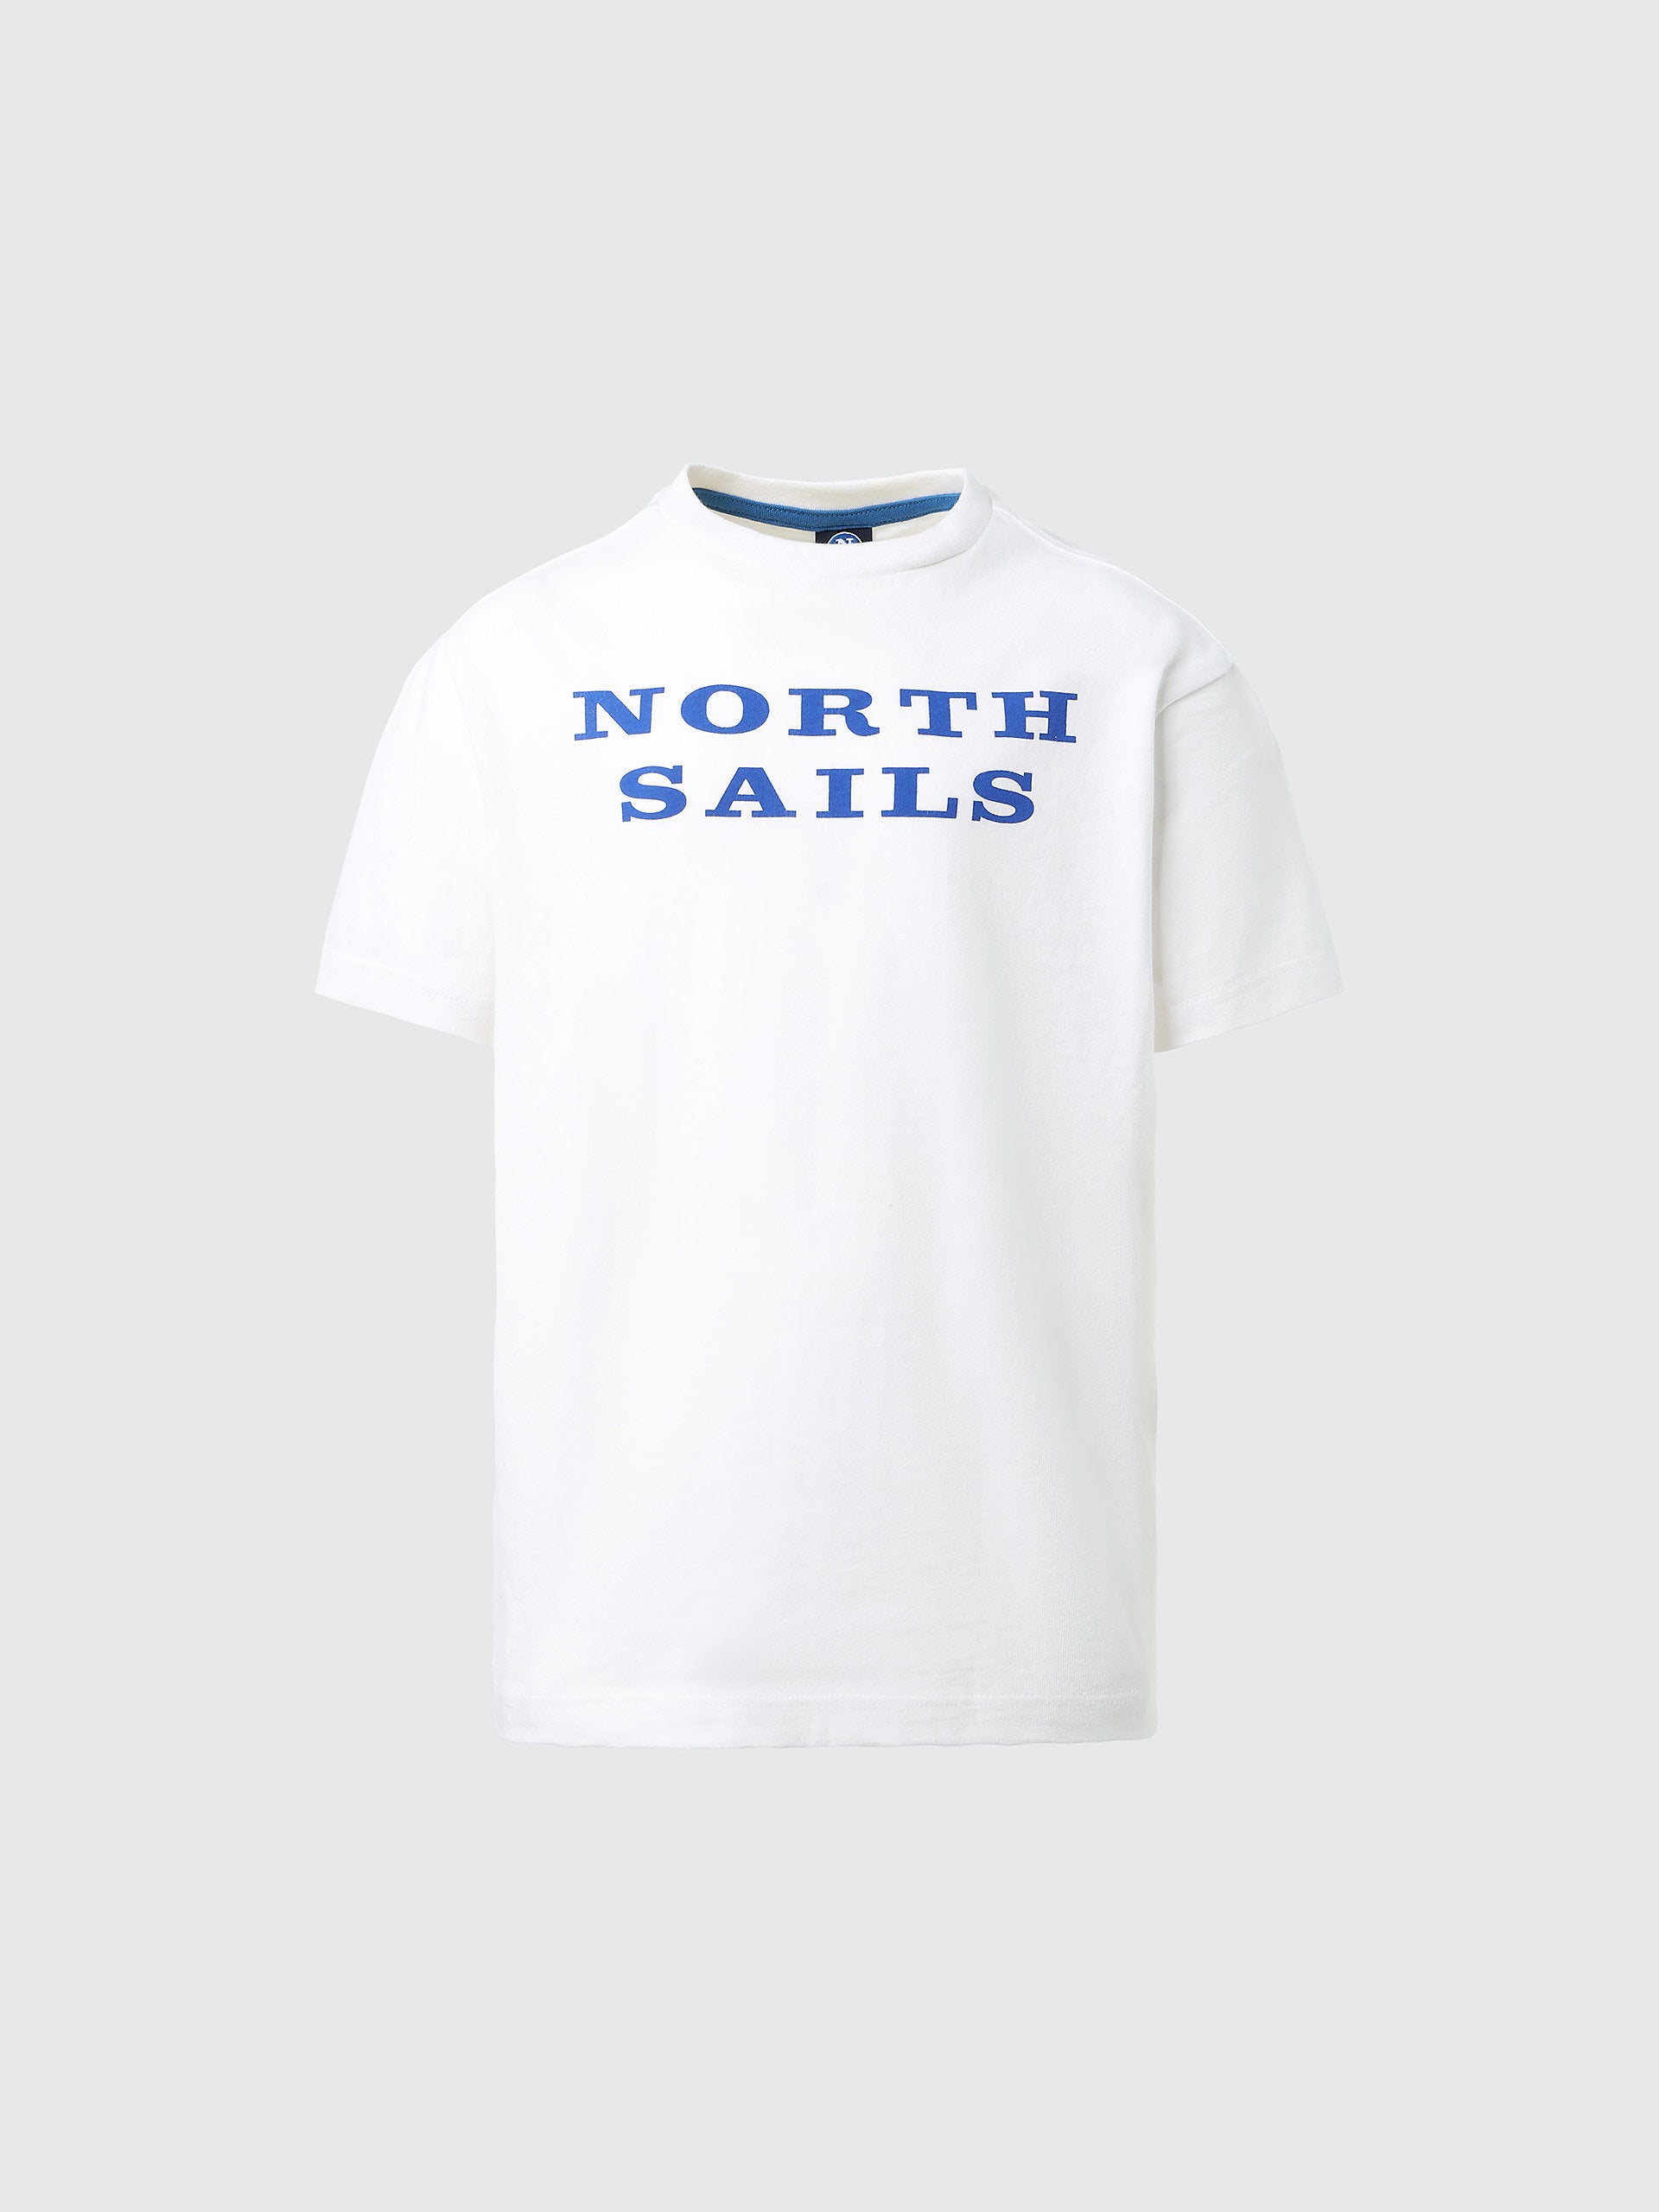 North Sails - T-shirt with chest printNorth SailsWhite4